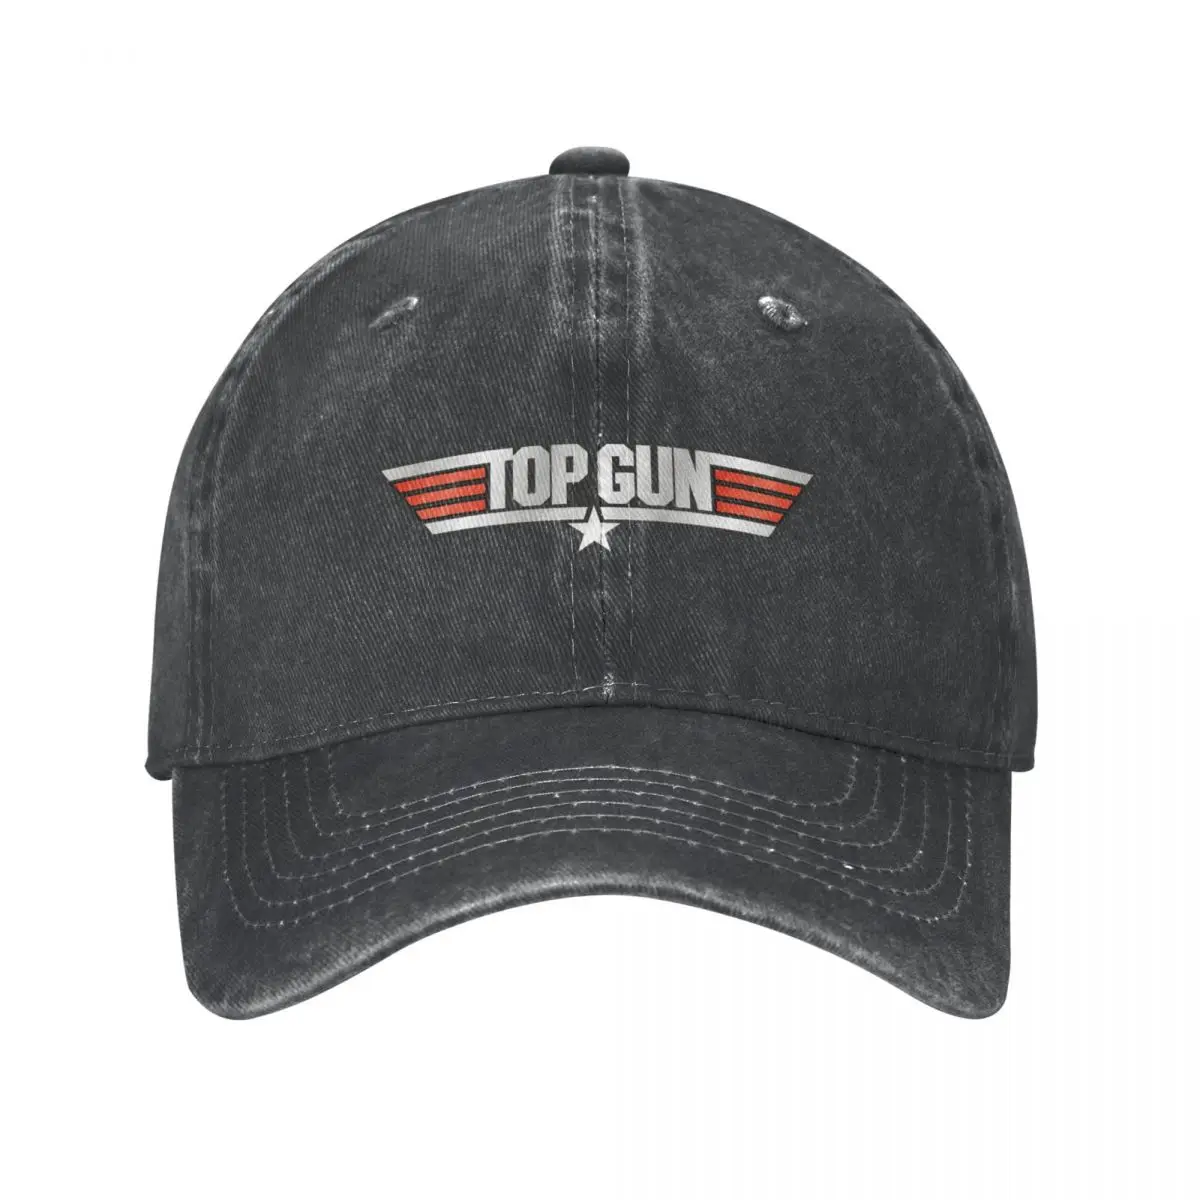 

Top Gun Men Women Baseball Cap 80s Movies Distressed Denim Caps Hat Outdoor All Seasons Travel Unstructured Soft Snapback Cap